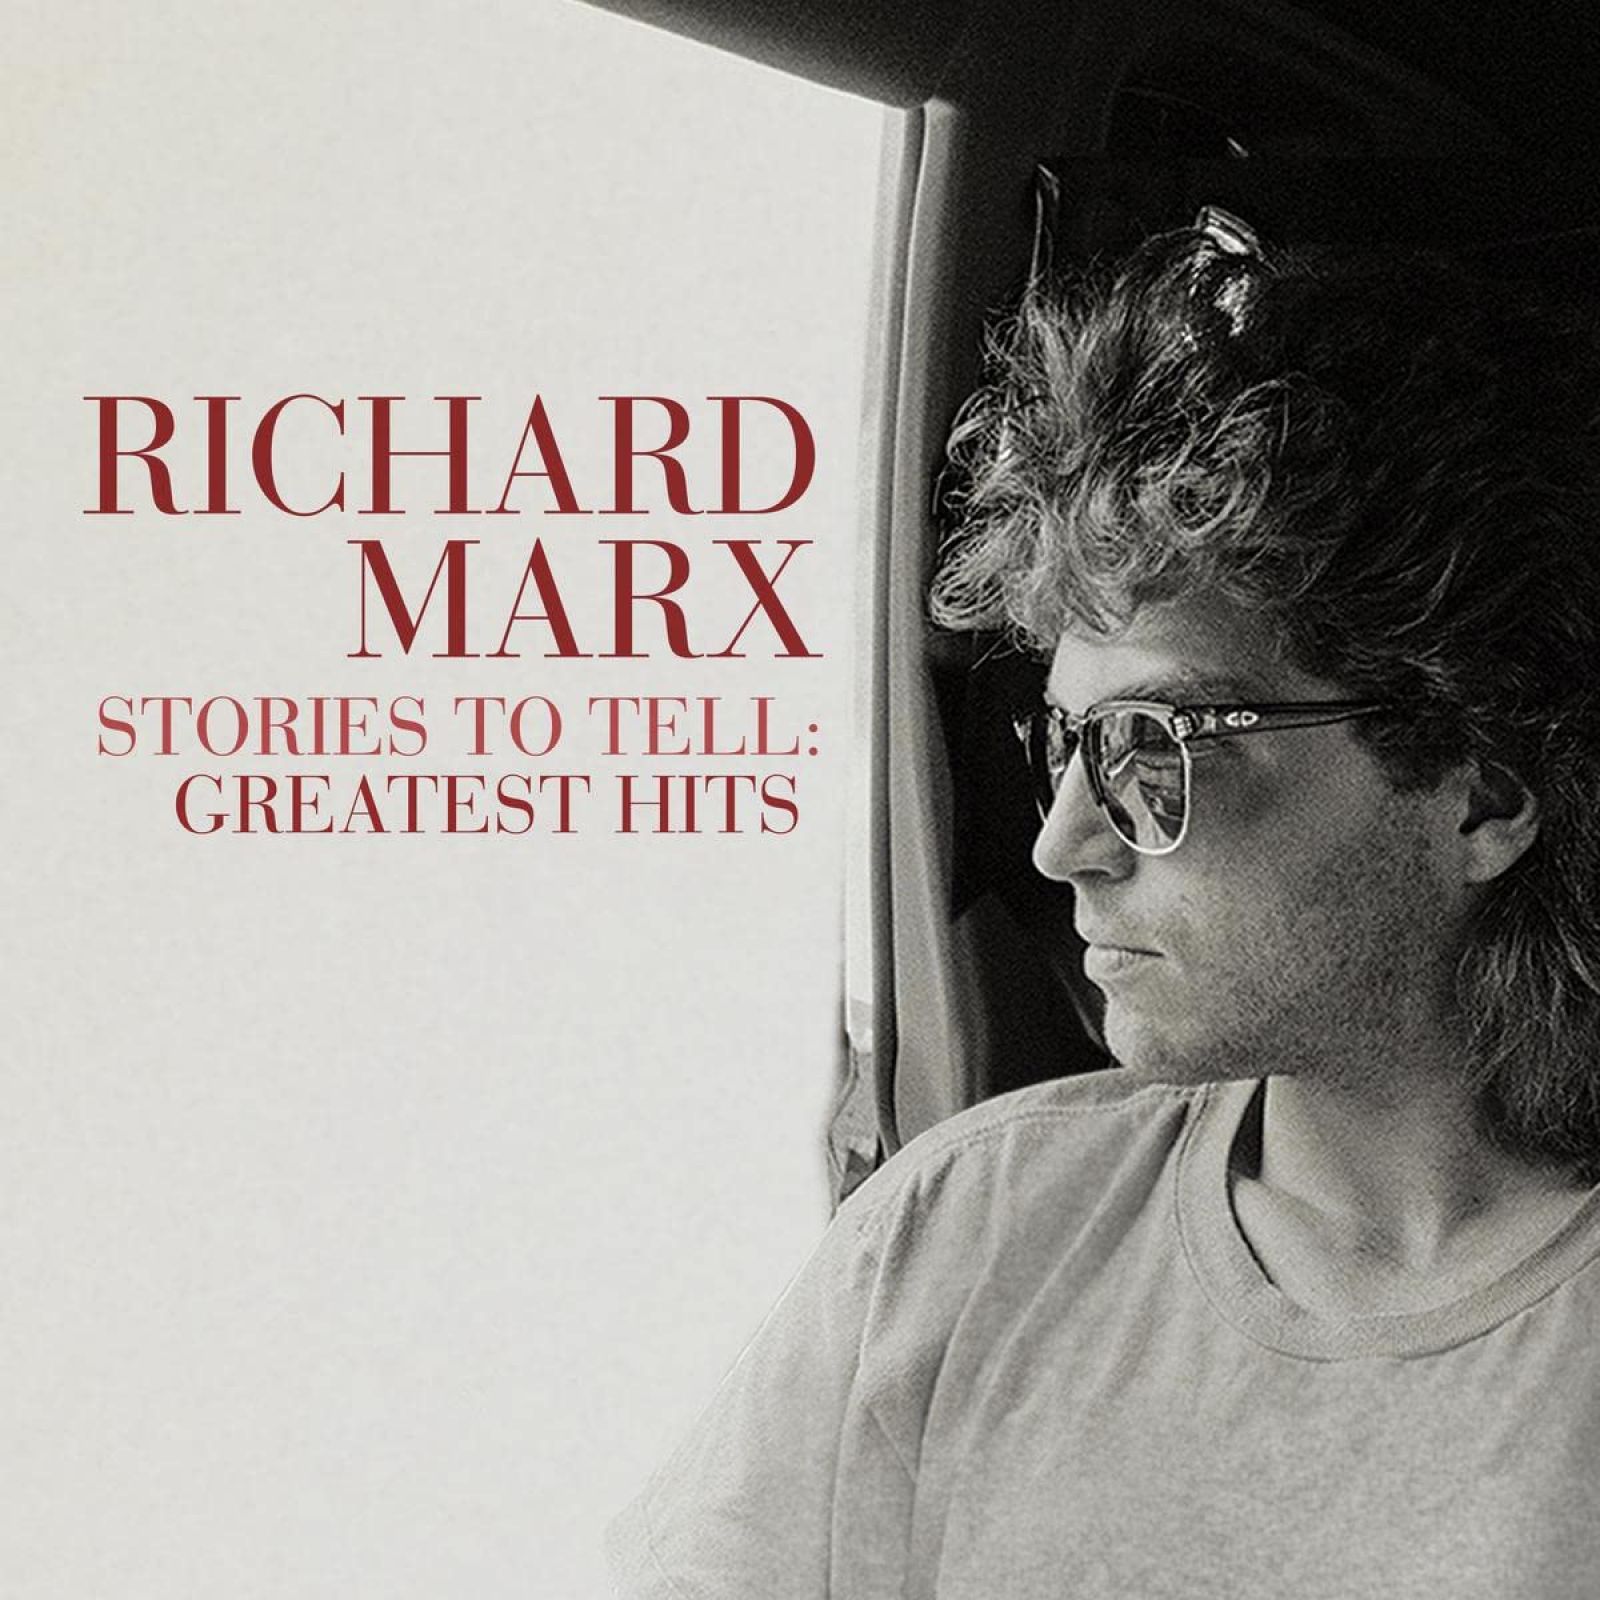 marx richard виниловая пластинка marx richard stories to tell greatest hits Виниловая пластинка Marx, Richard, Stories To Tell: Greatest Hits (4050538715392)